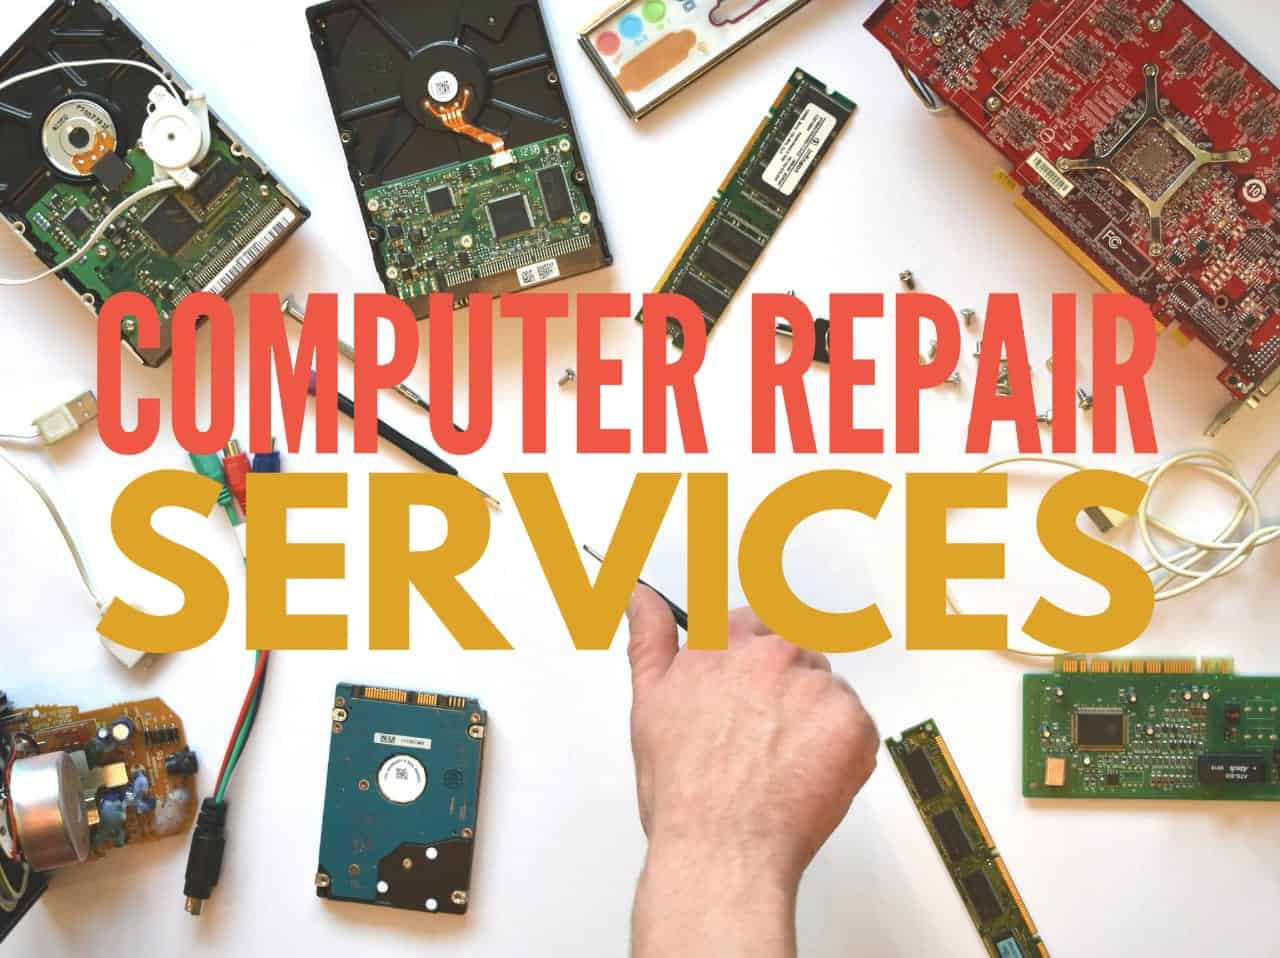 Computer repair services in San Diego, California.